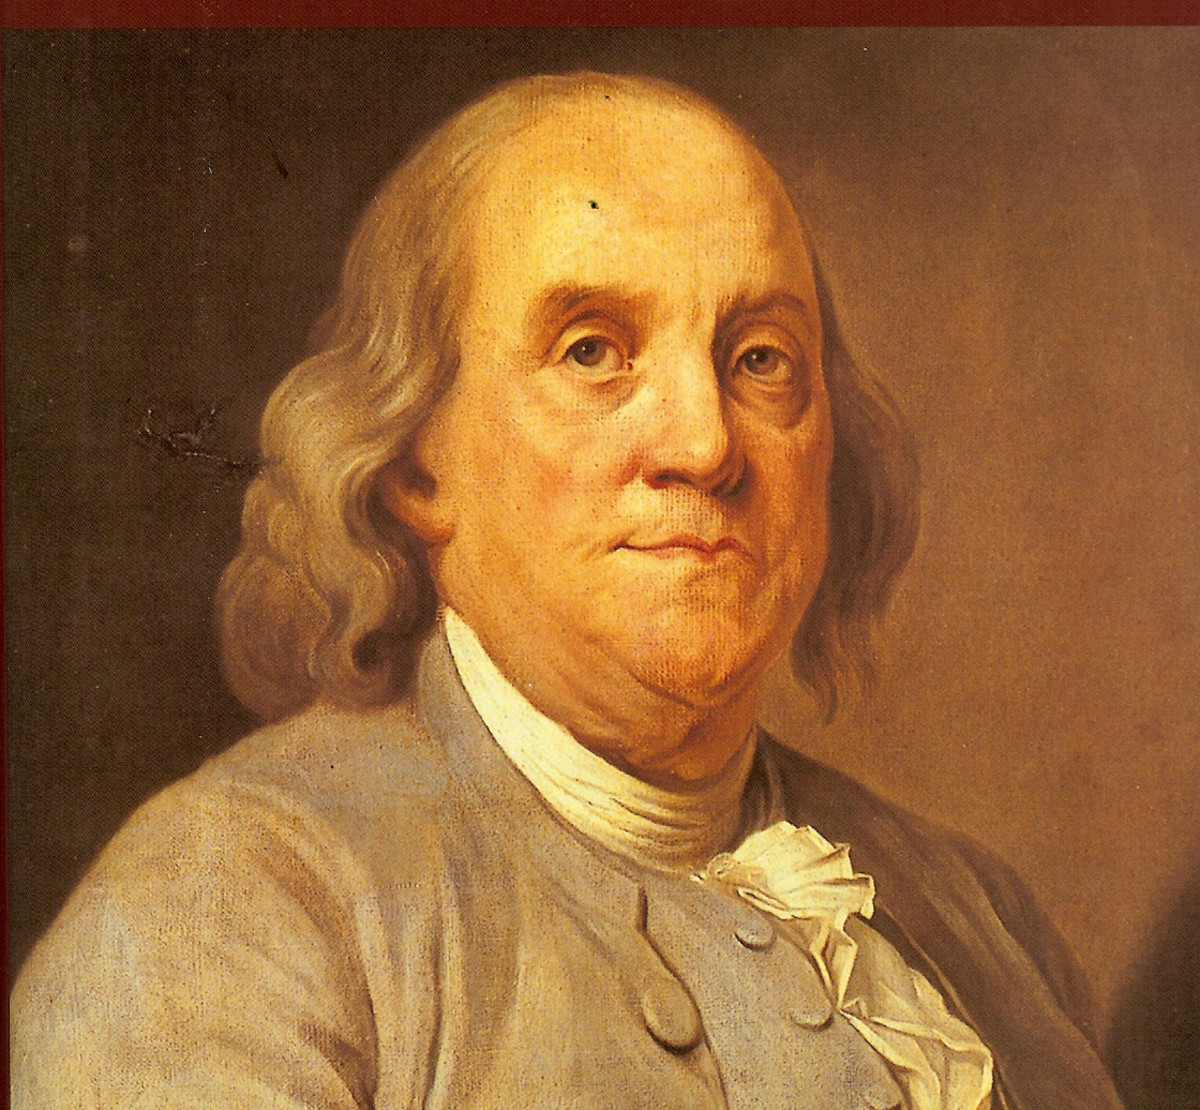 Benjamin (Ben) Franklin on the Articles of Confederation